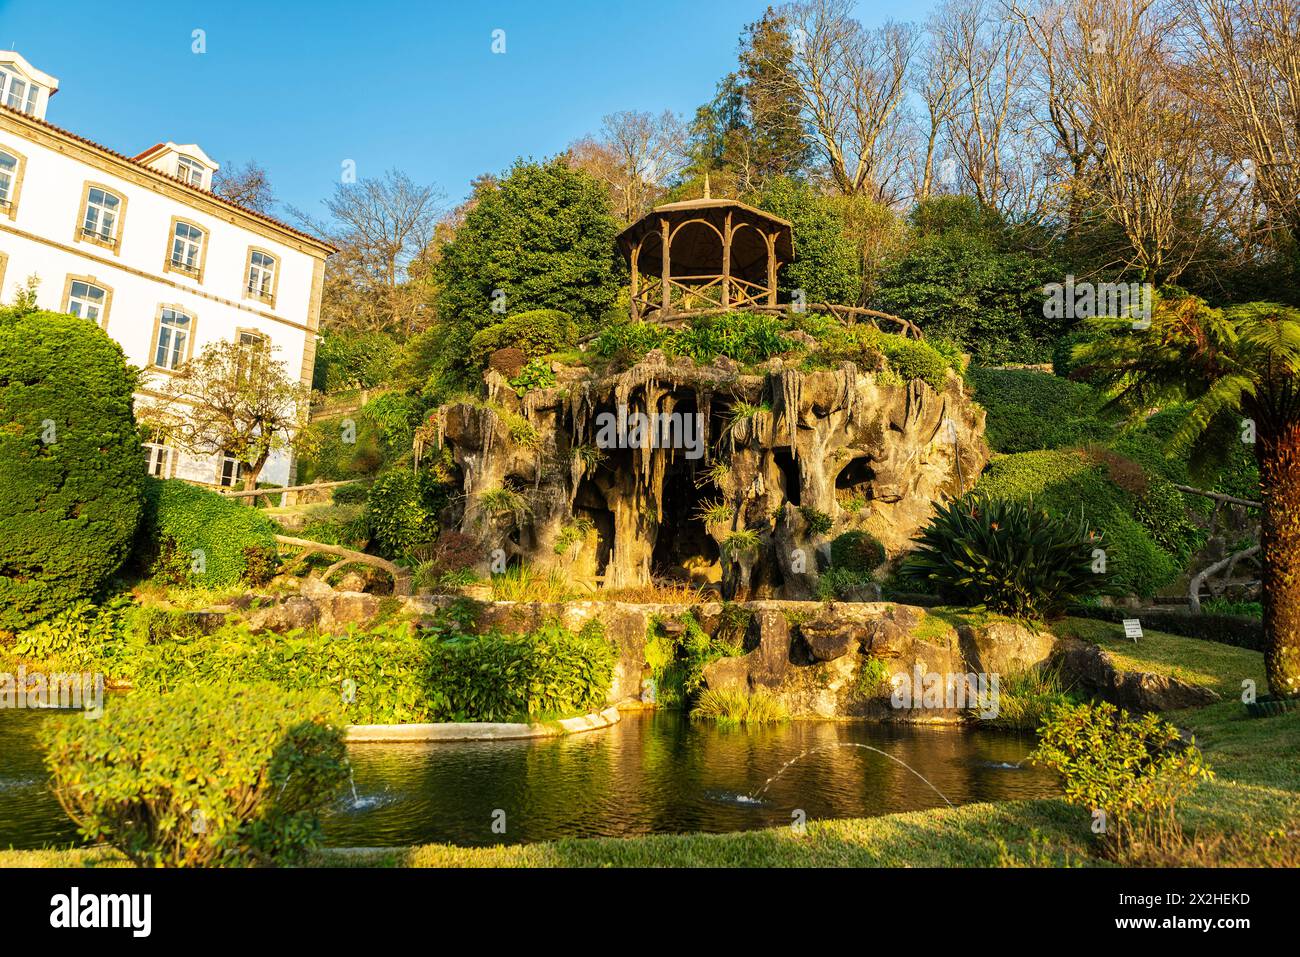 Artificial grotto of the Sanctuary of Bom Jesus do Monte, Braga, Portugal Stock Photo